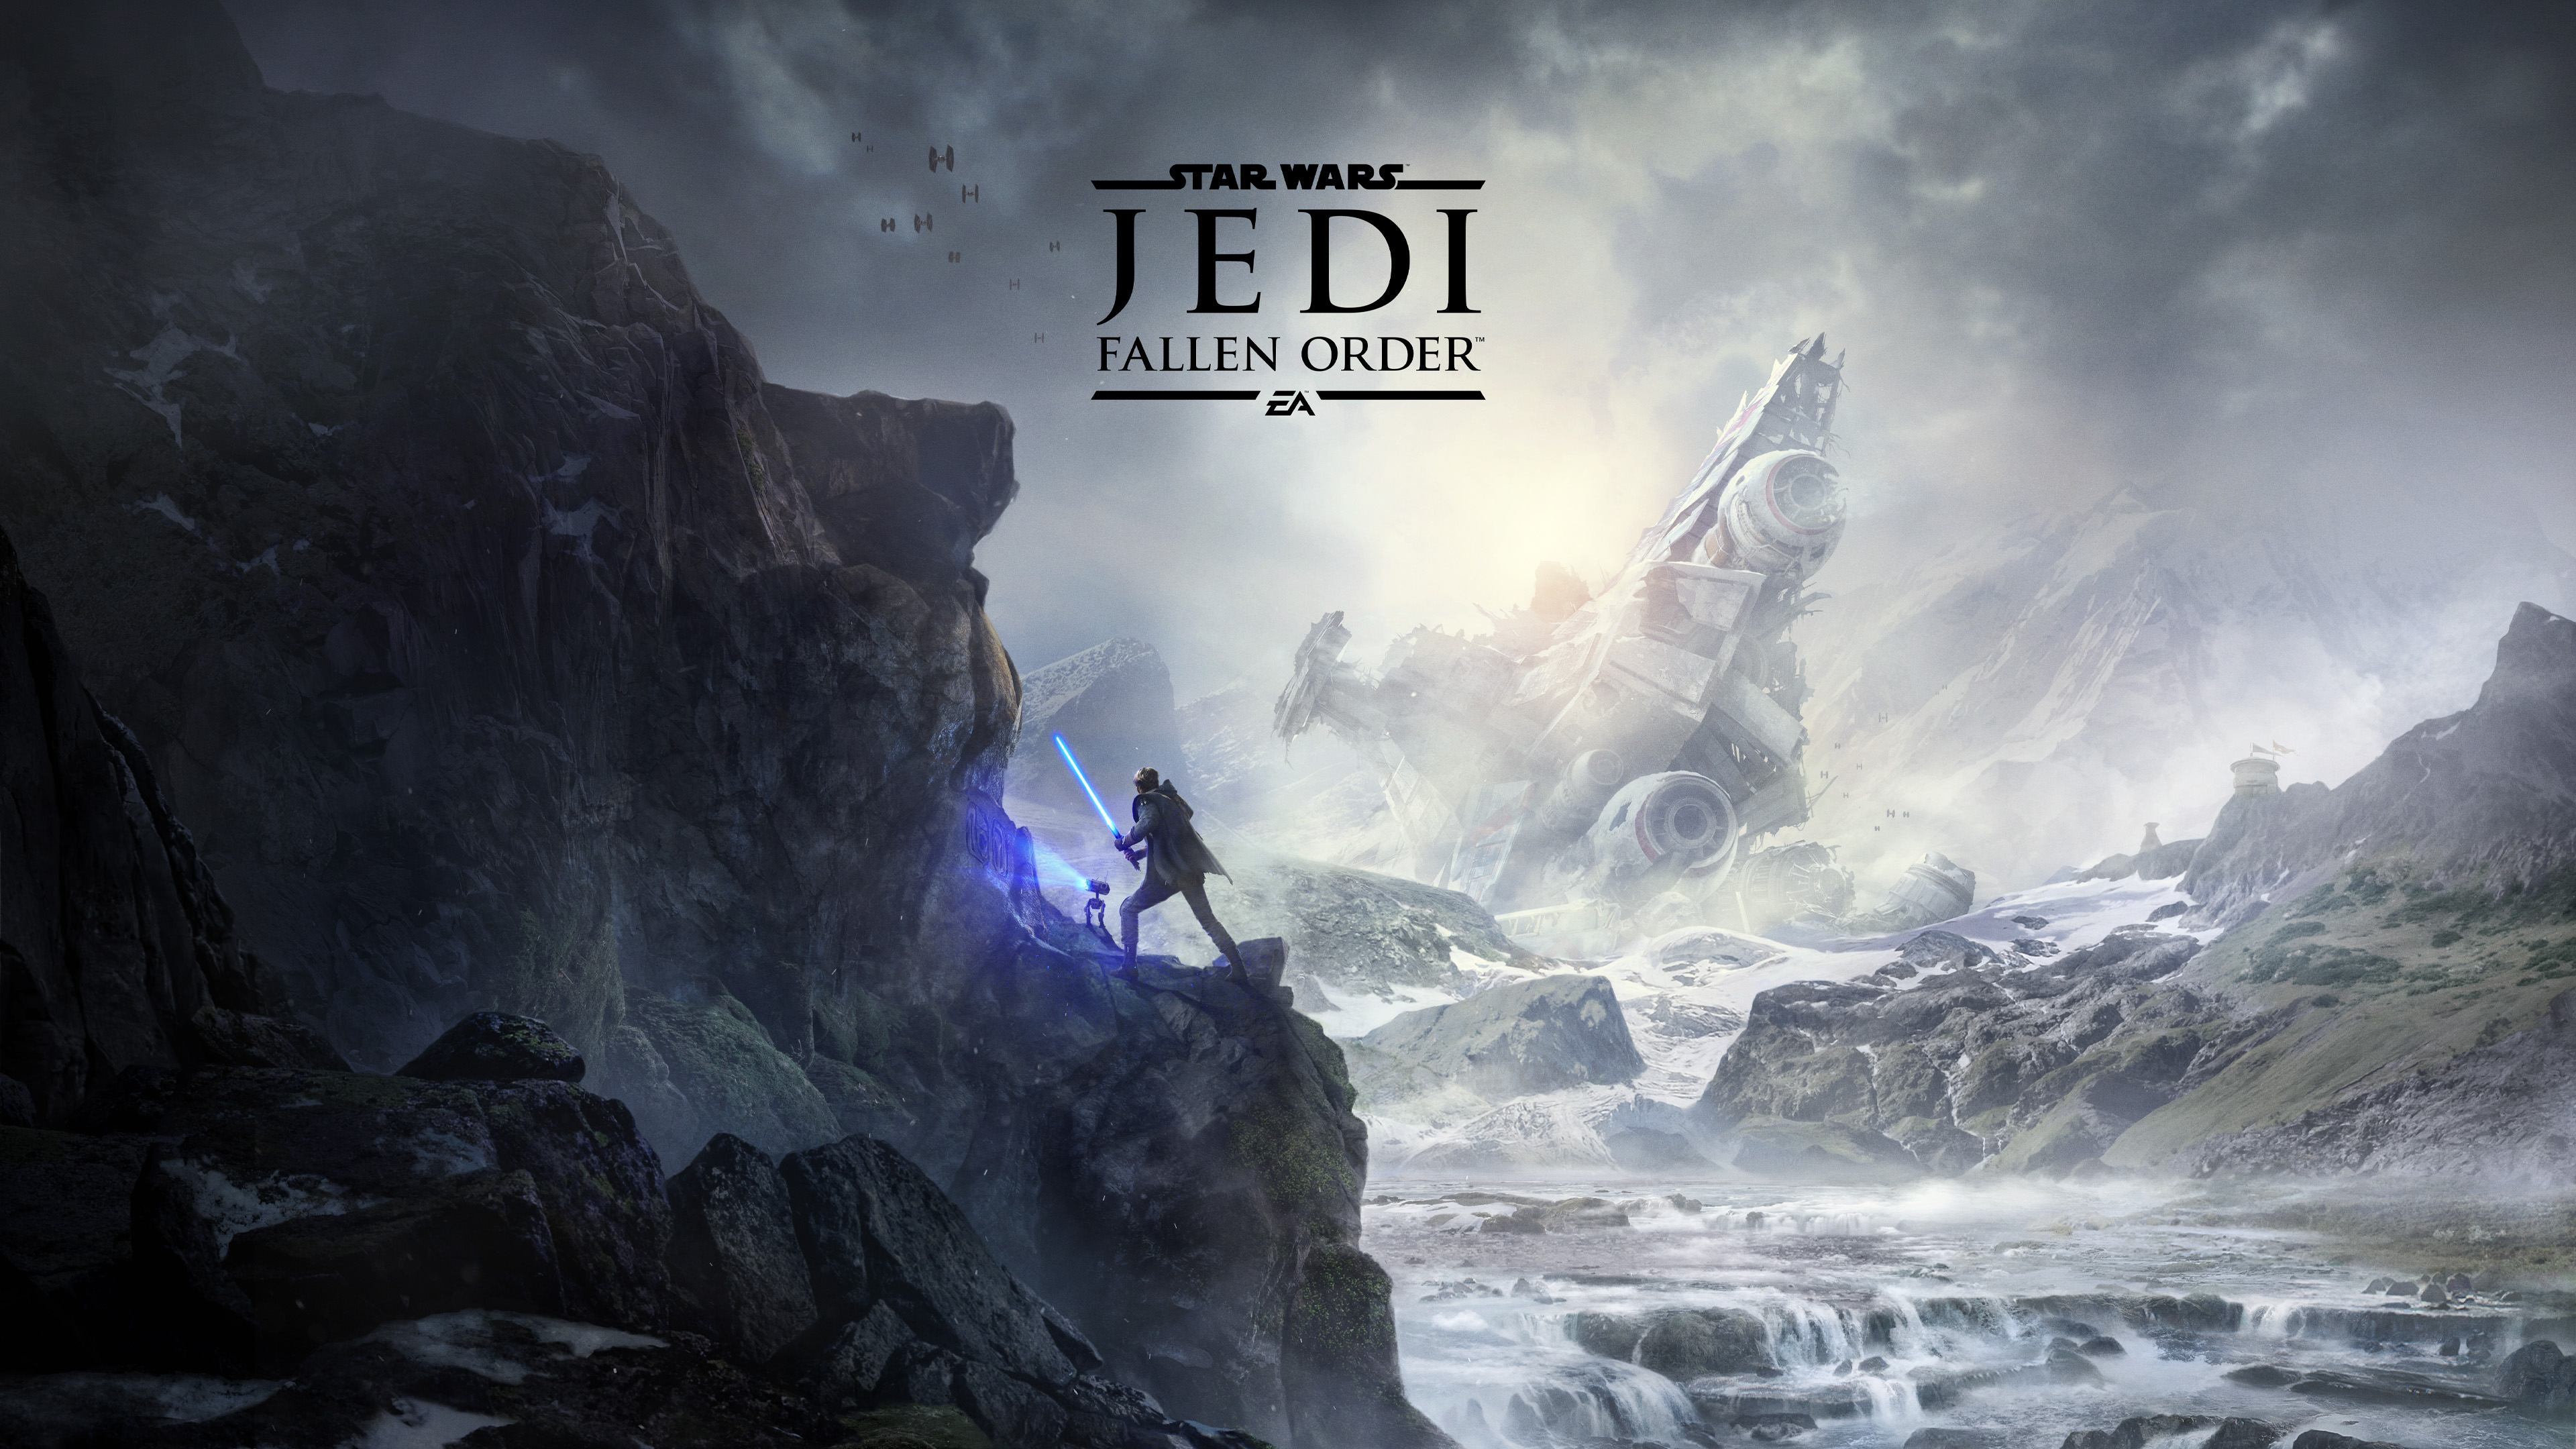 Star wars battlefront 2 vs star wars jedi fallen order Star Wars Jedi Fallen Order Trailers And Media Ea Official Site